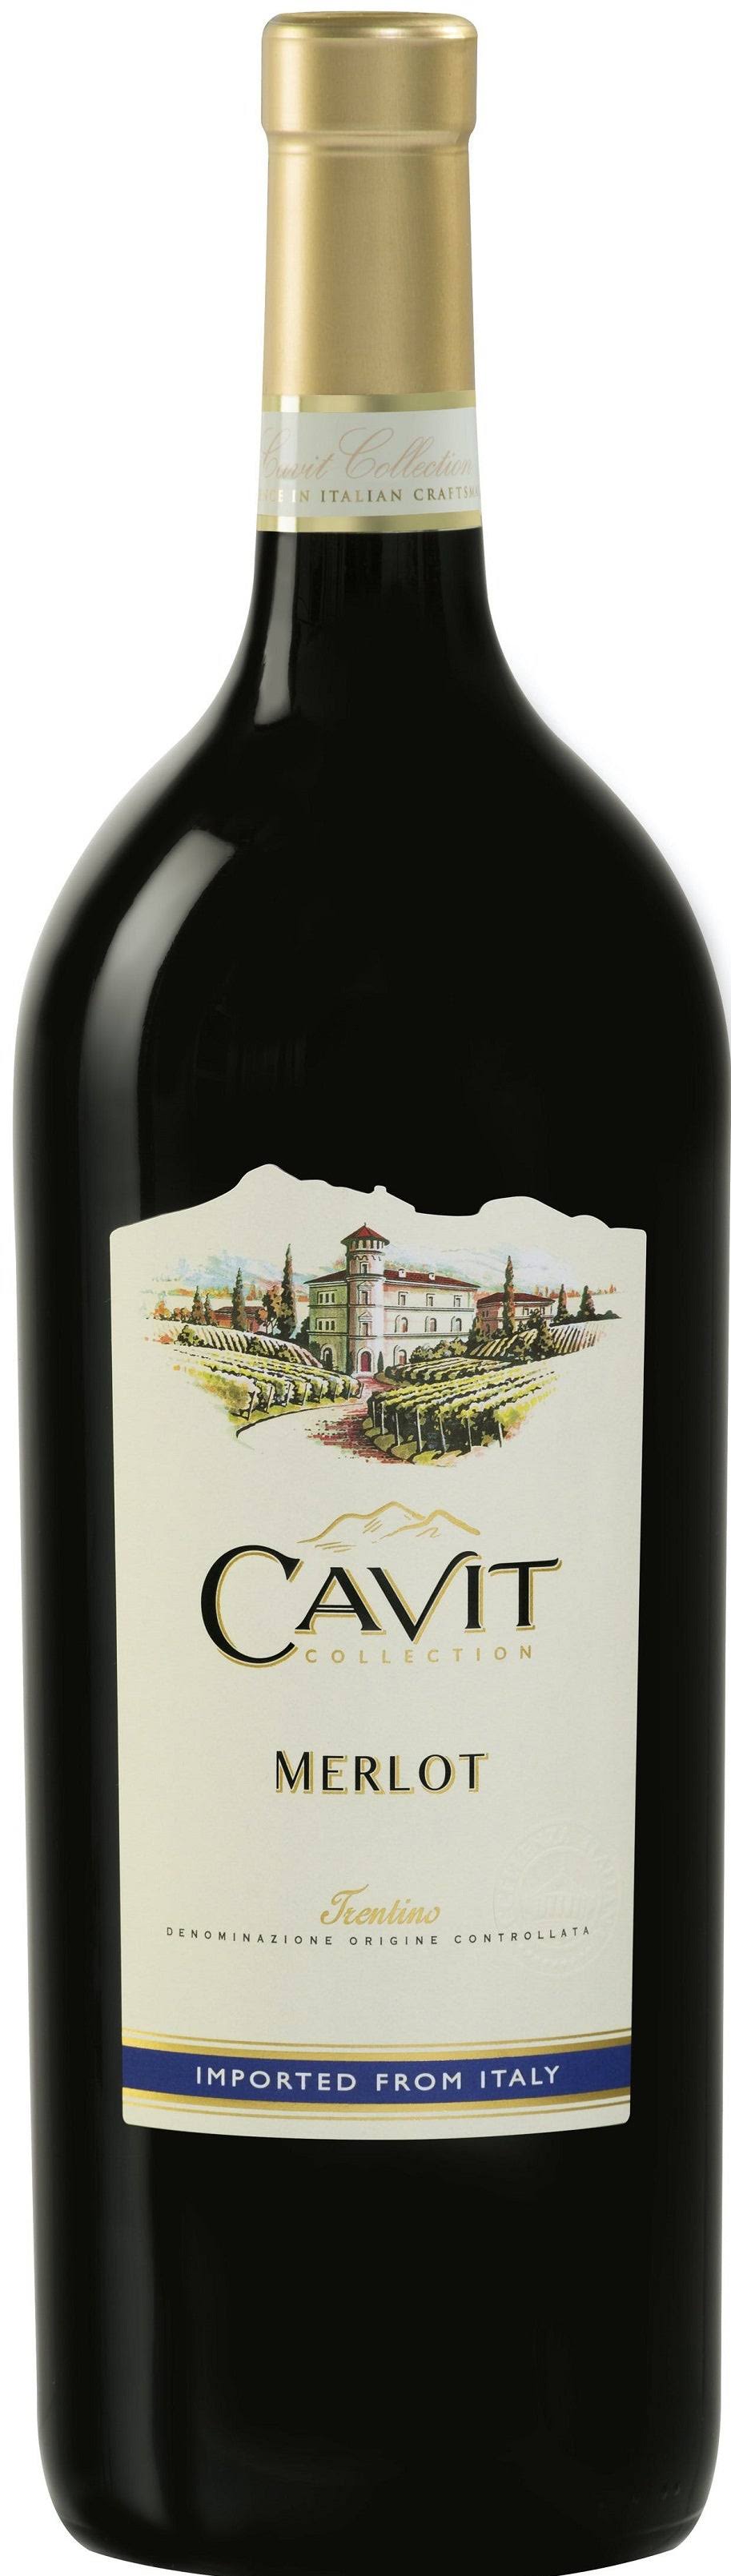 Cavit Collection Merlot, Trentino, 2012 - 1.5 lt